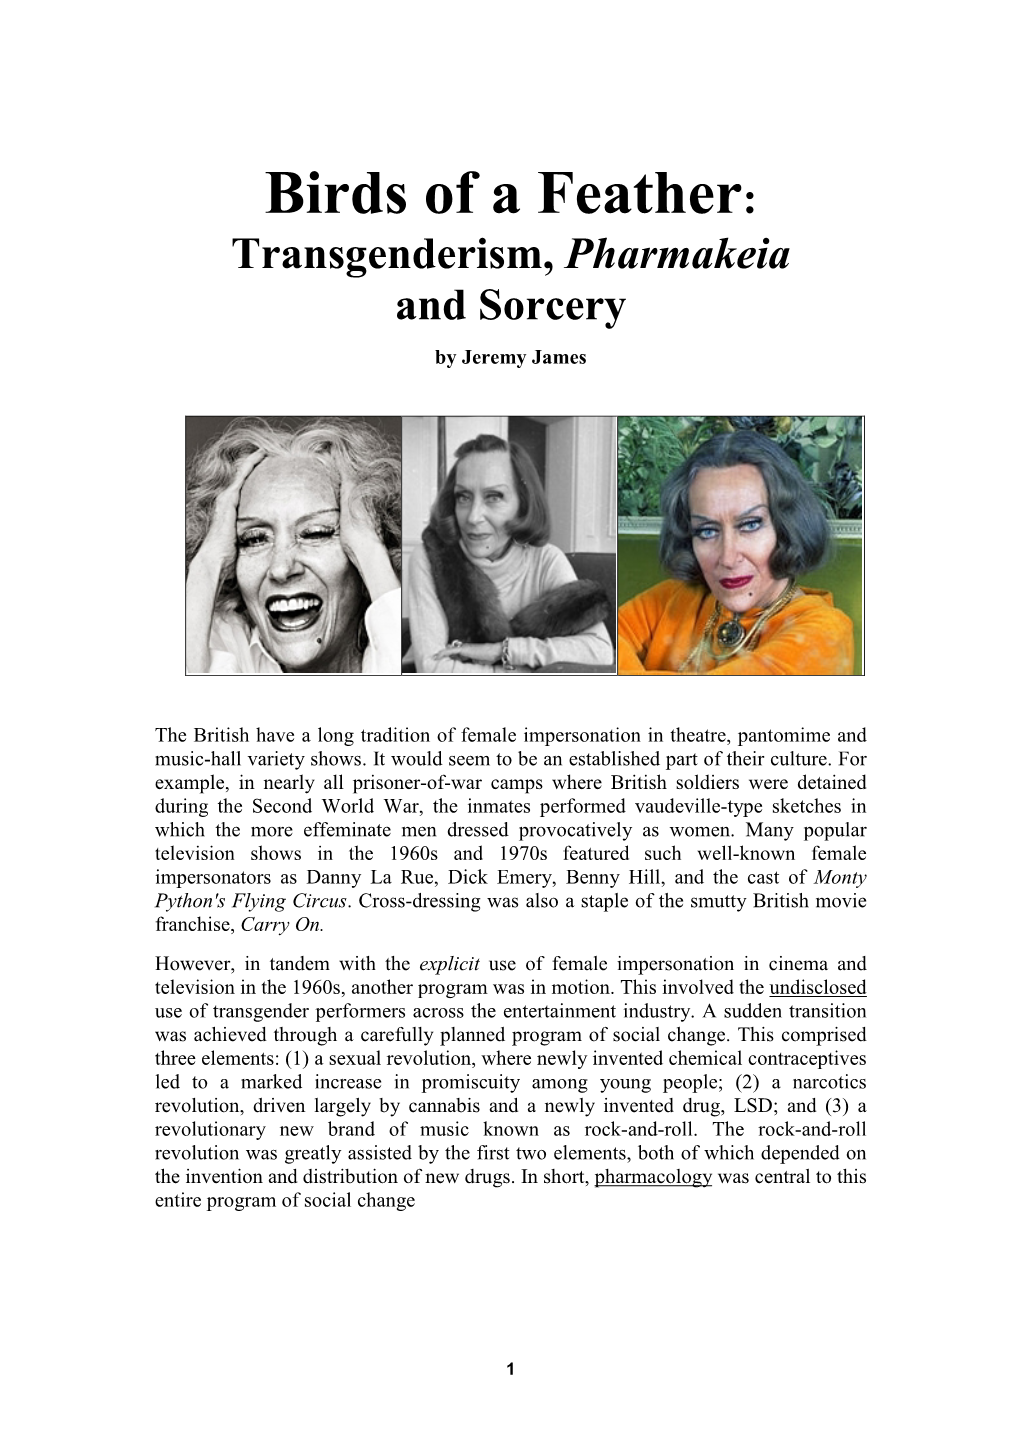 Transgenderism, Pharmakeia and Sorcery